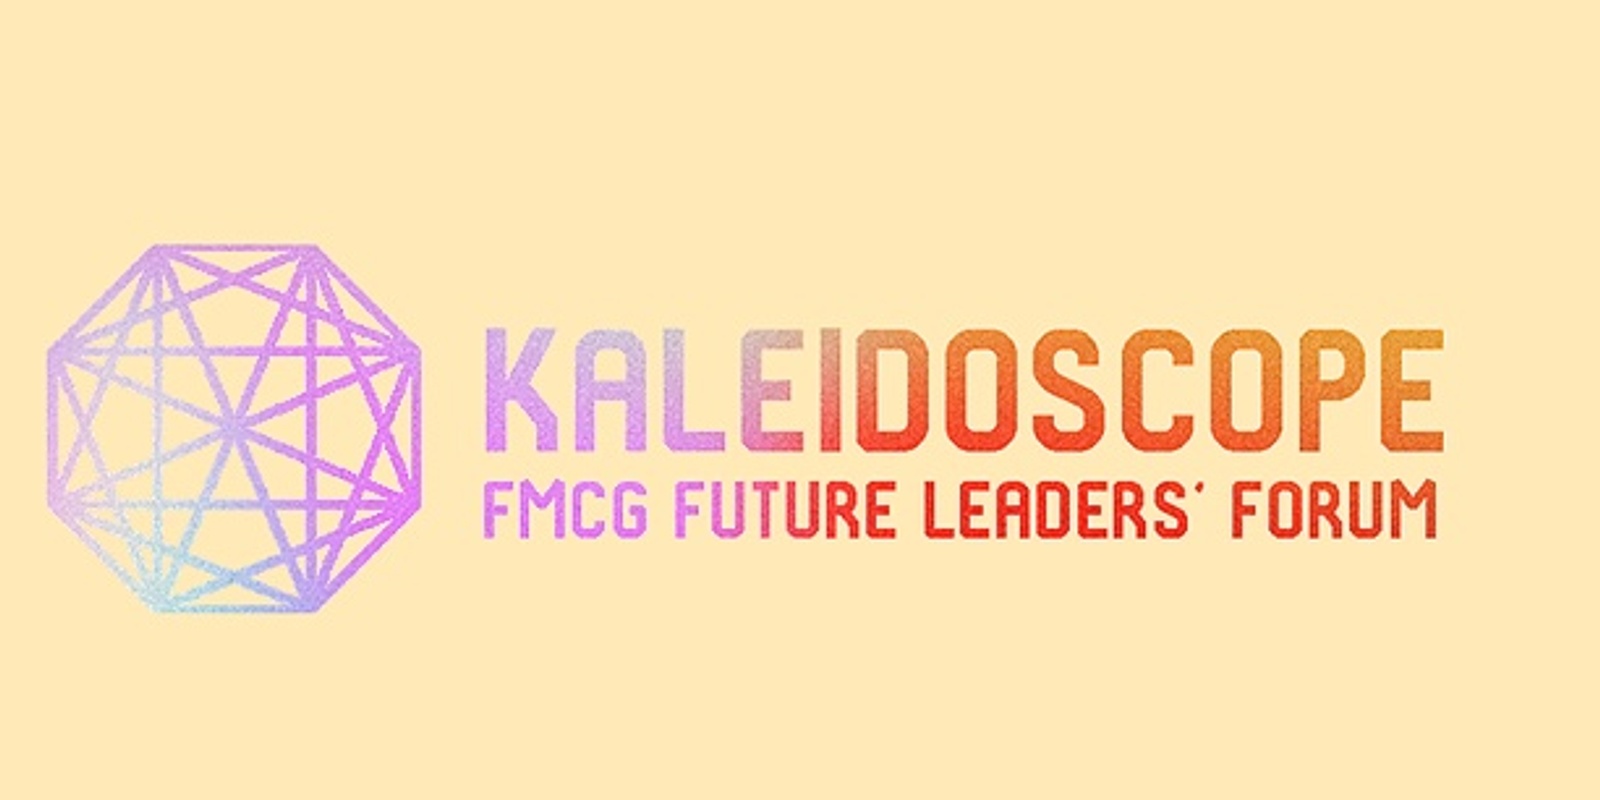 FMCG Future Leaders Forum's banner